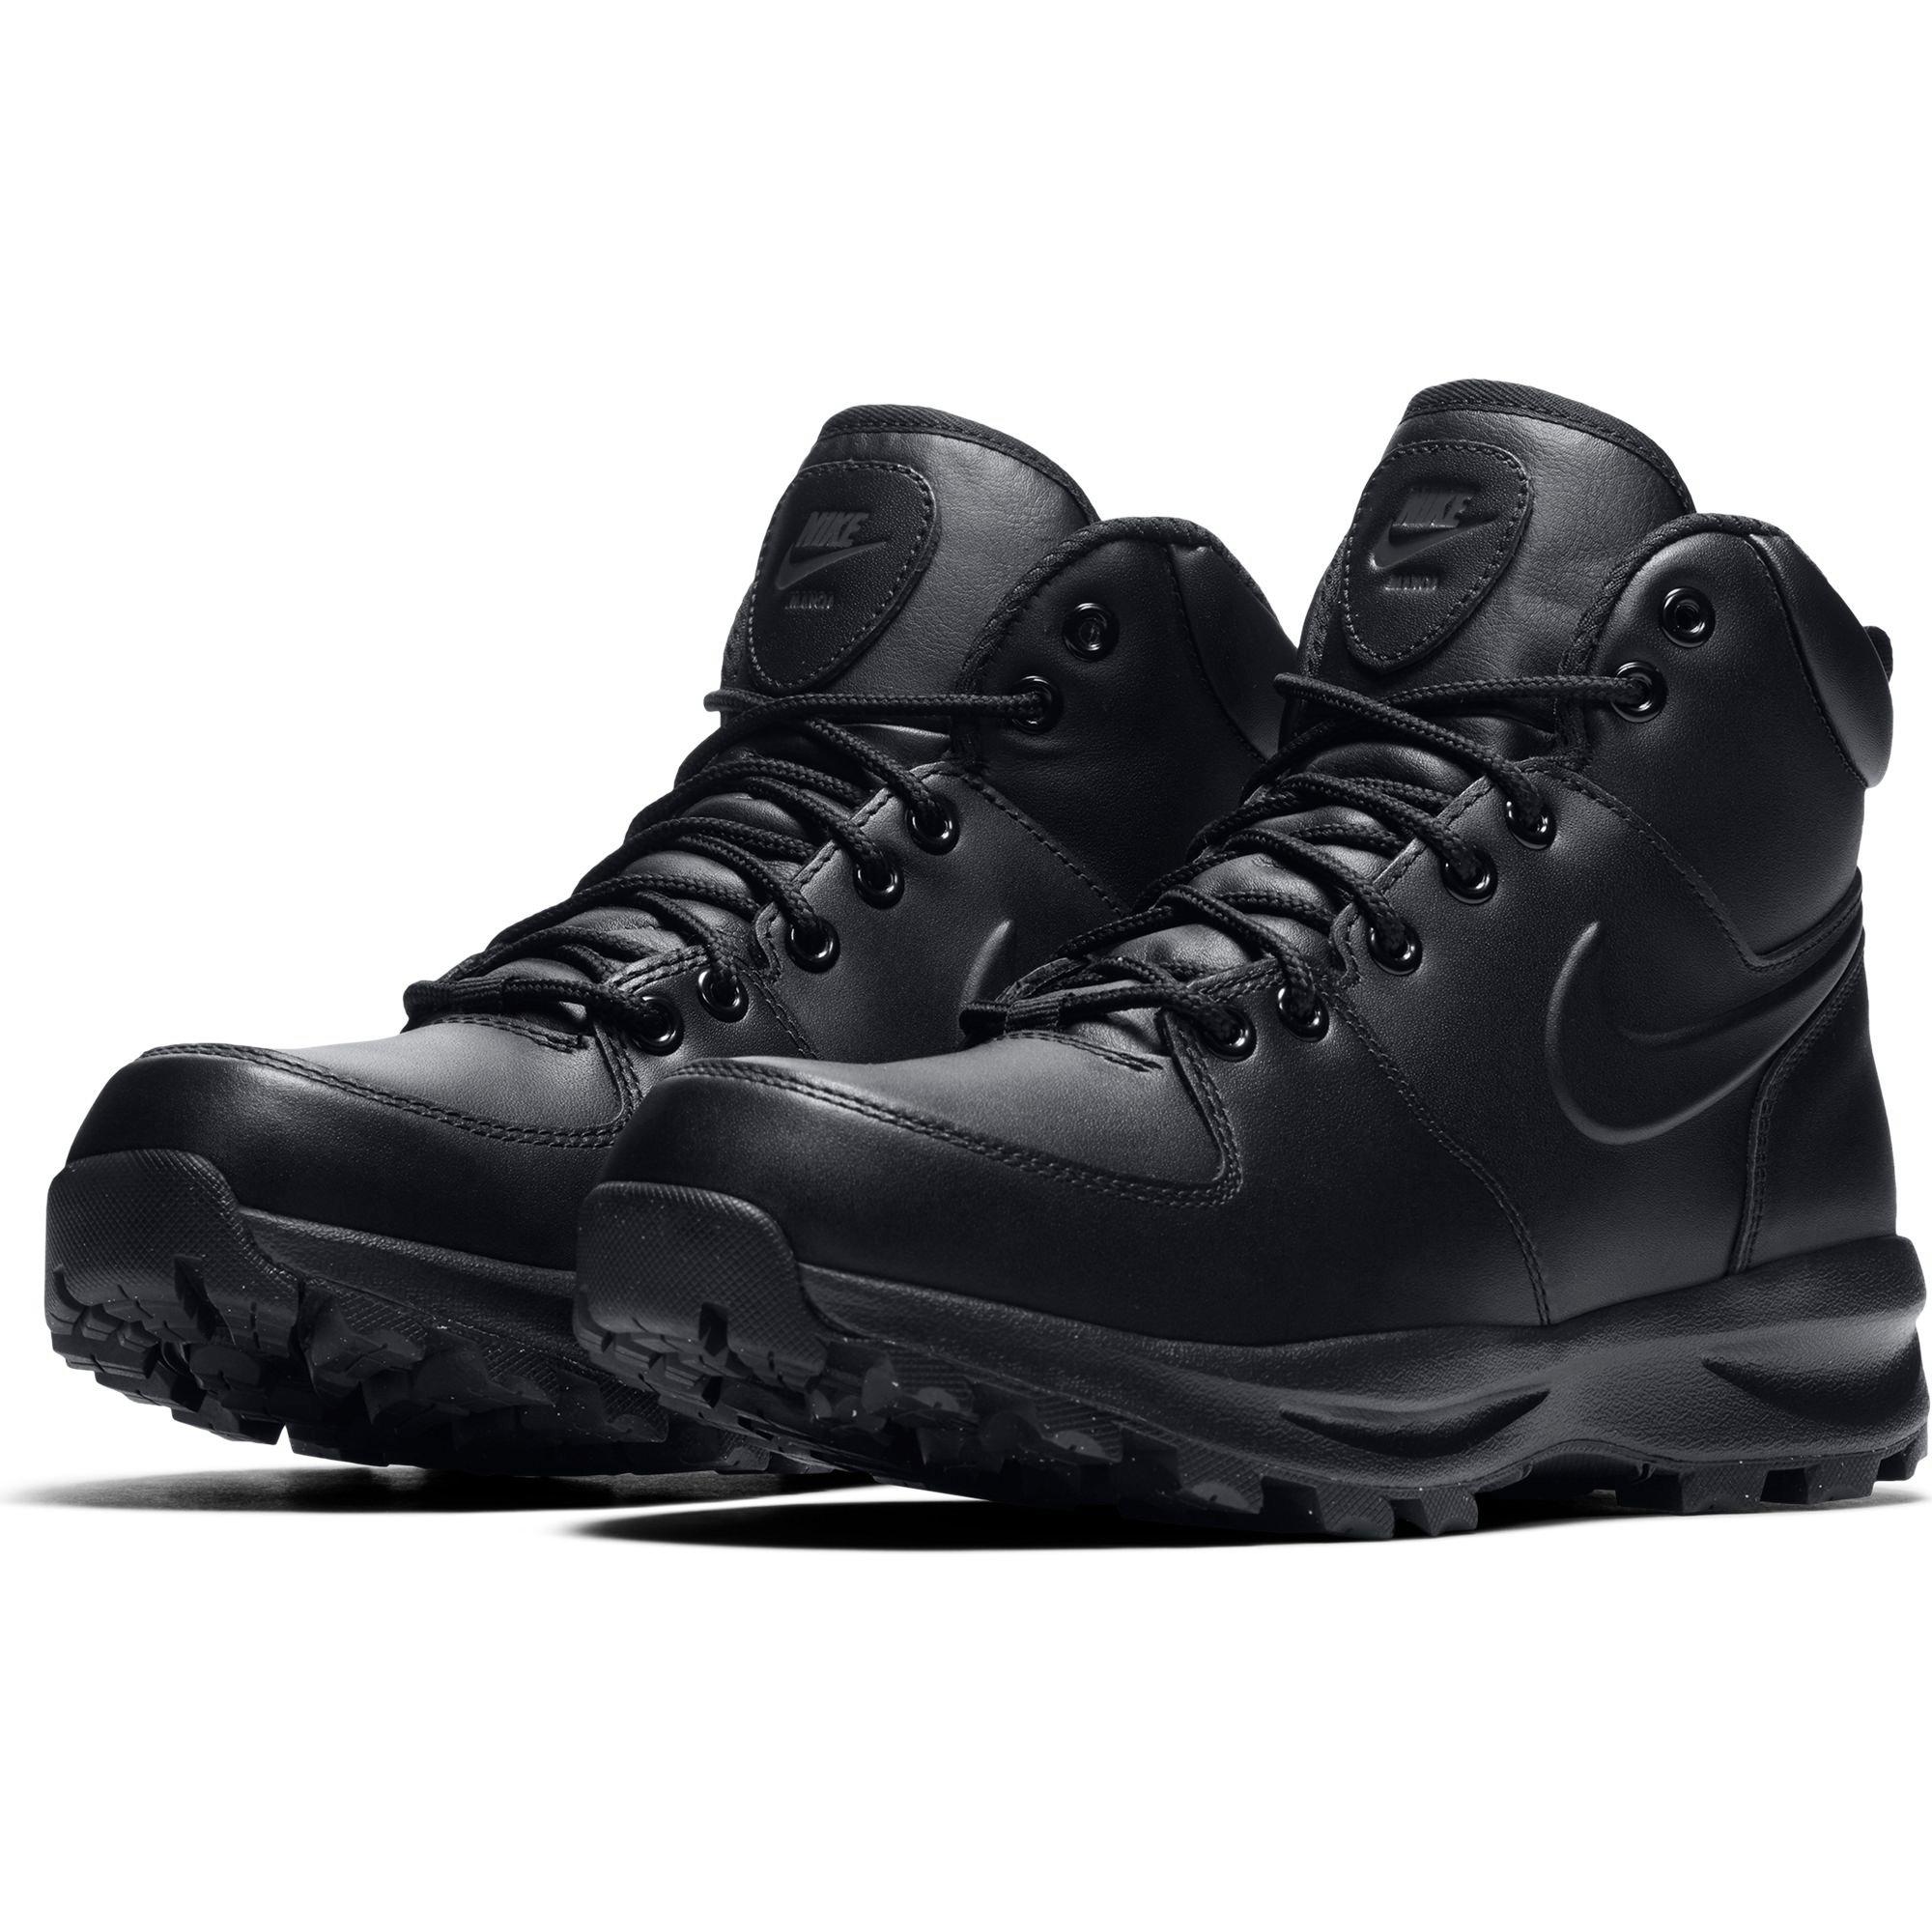 Manoa Leather "Black" Men's Boot